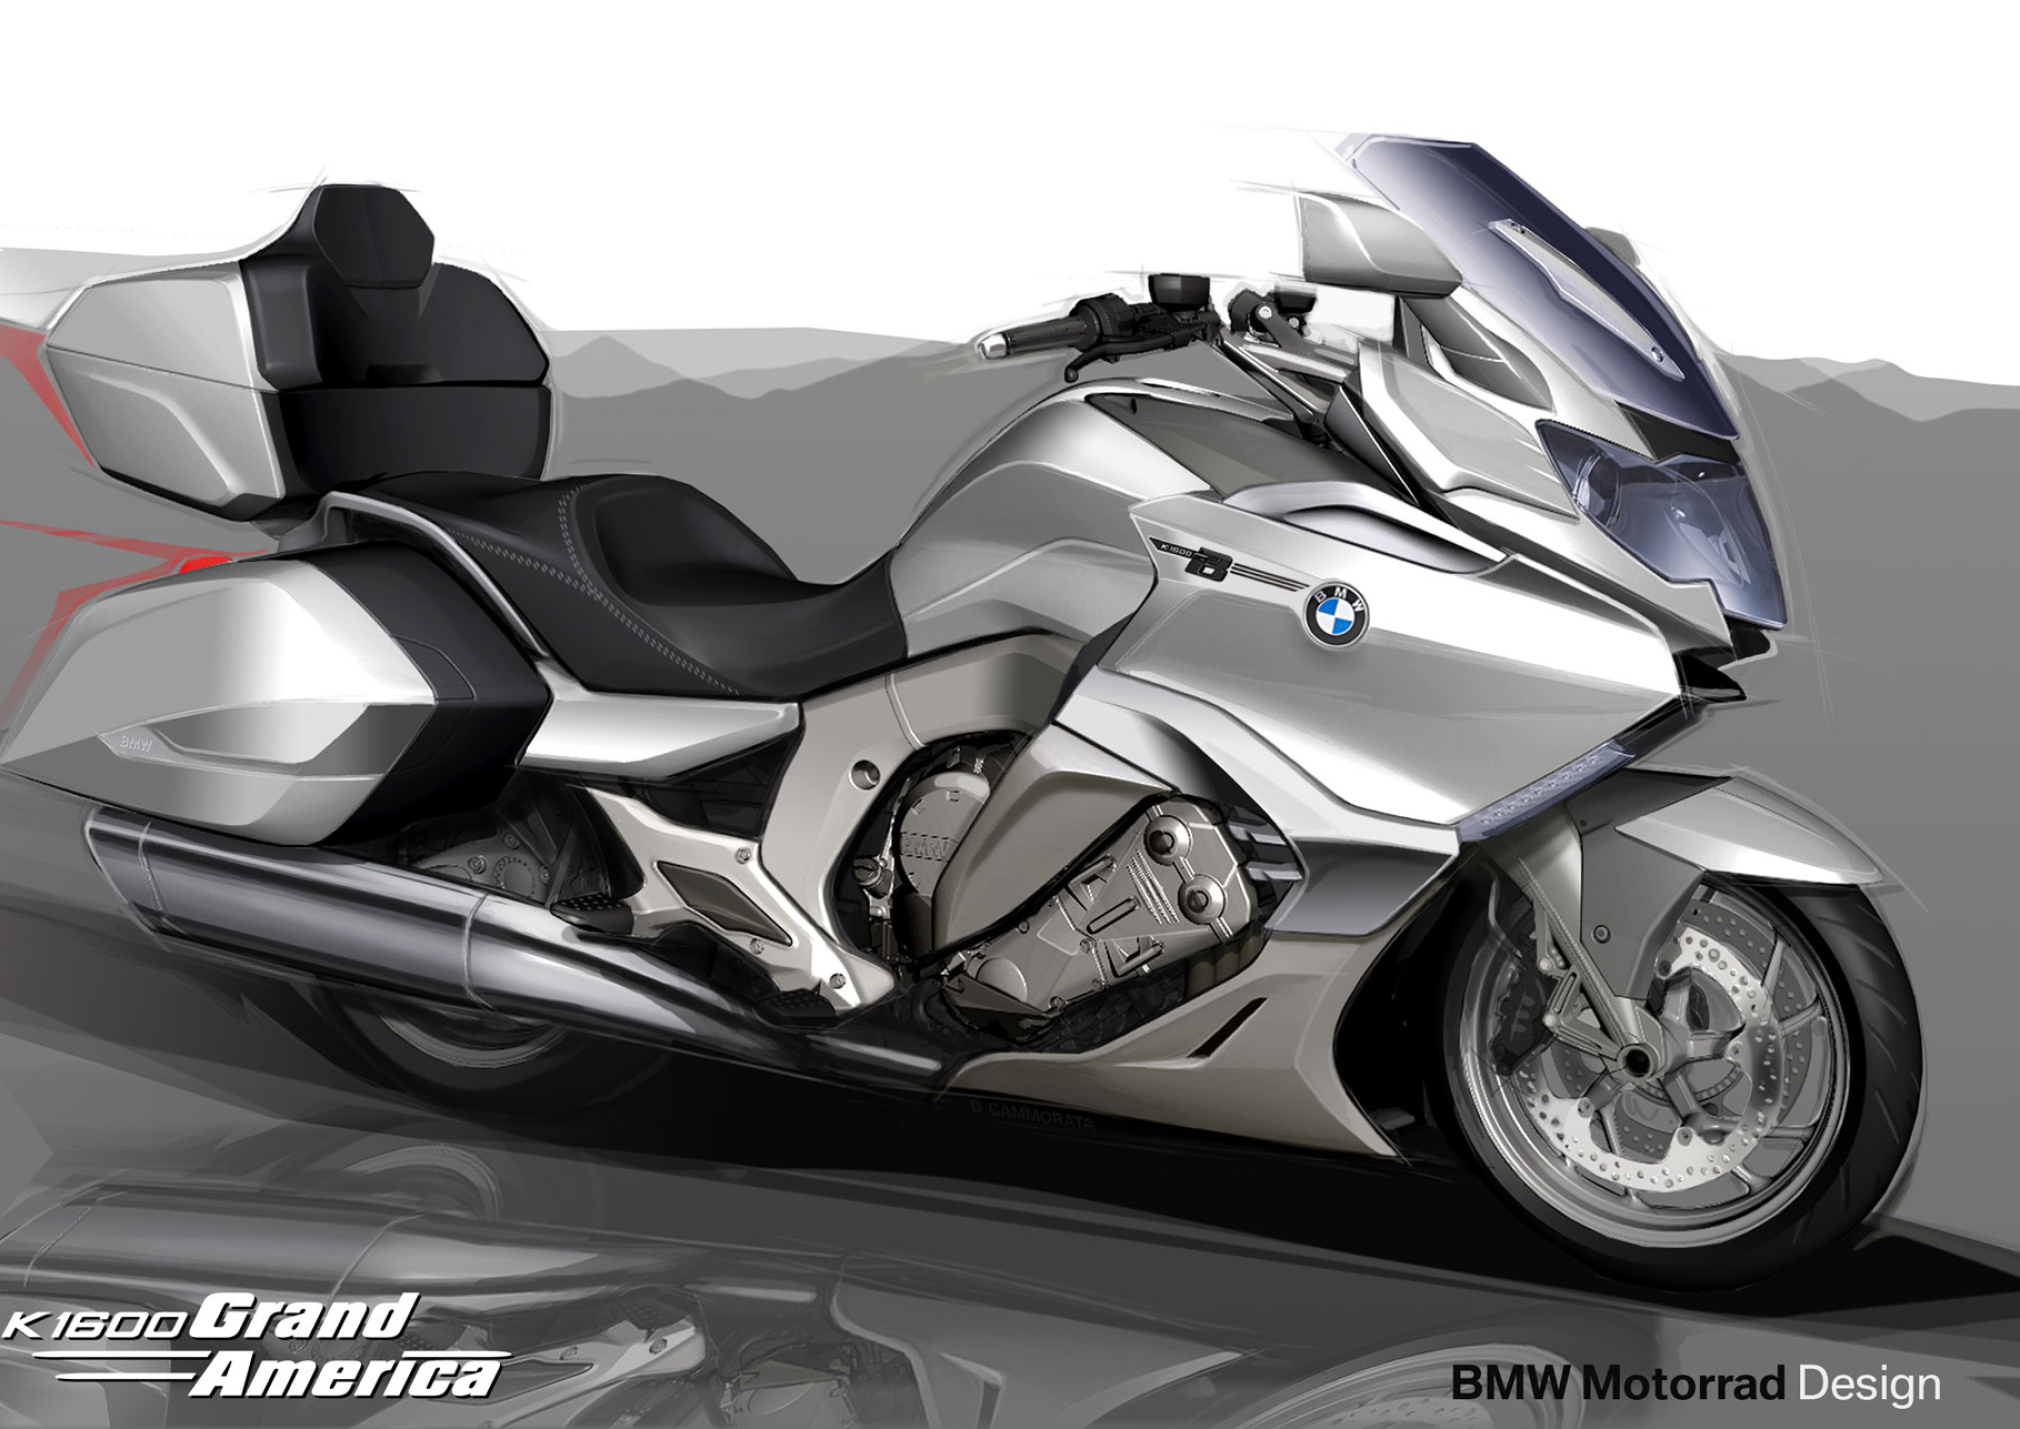 BMW K 1600 Grand America, 2020 model, Total Motorcycle guide, Ultimate touring machine, 2020x1430 HD Desktop